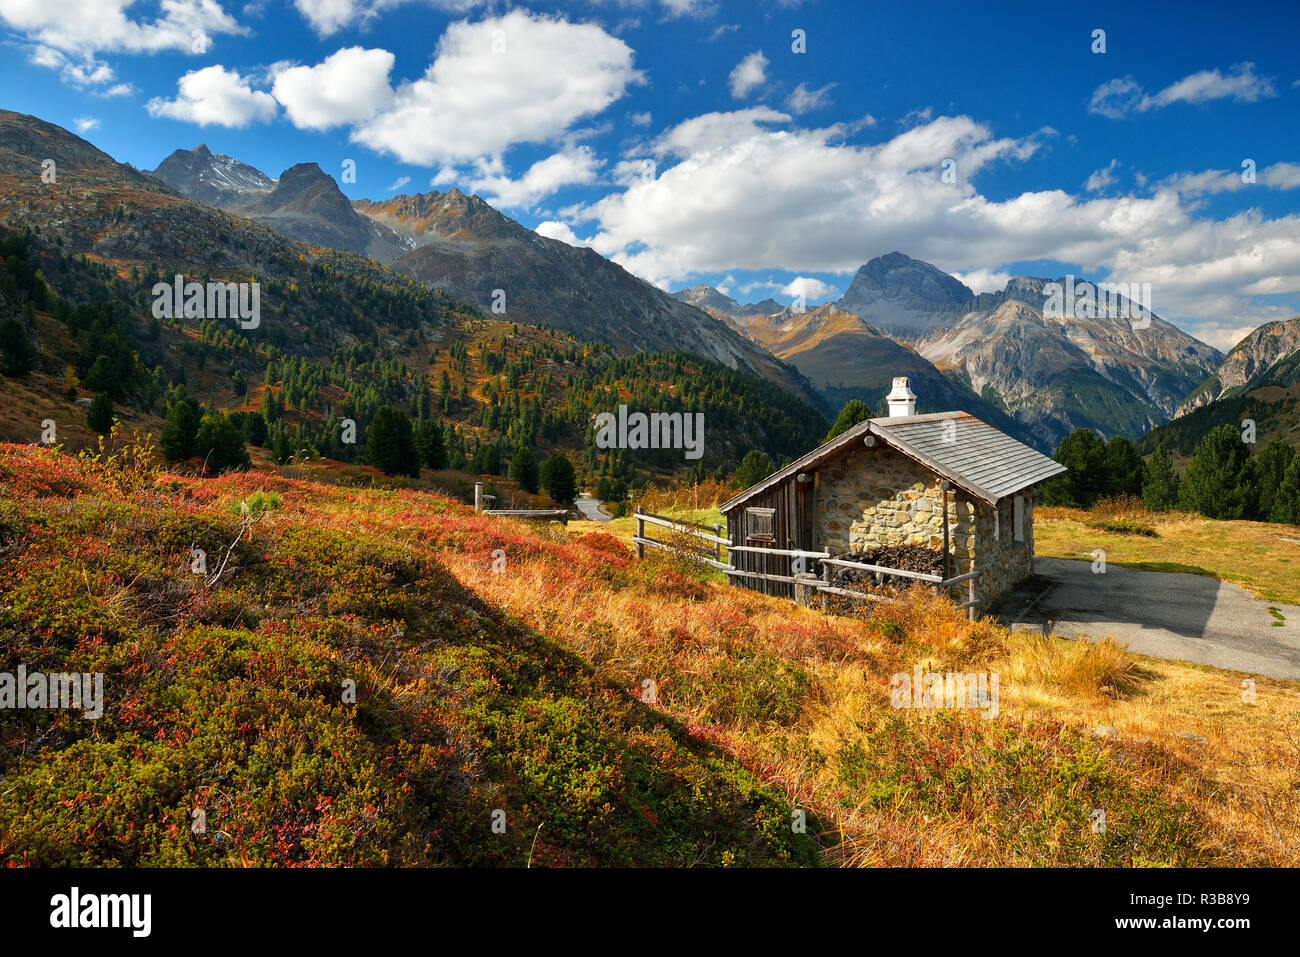 Mountain landscape with mountain hut in autumn, Albulatal, Val d'Alvra, Canton Graubünden, Switzerland Stock Photo